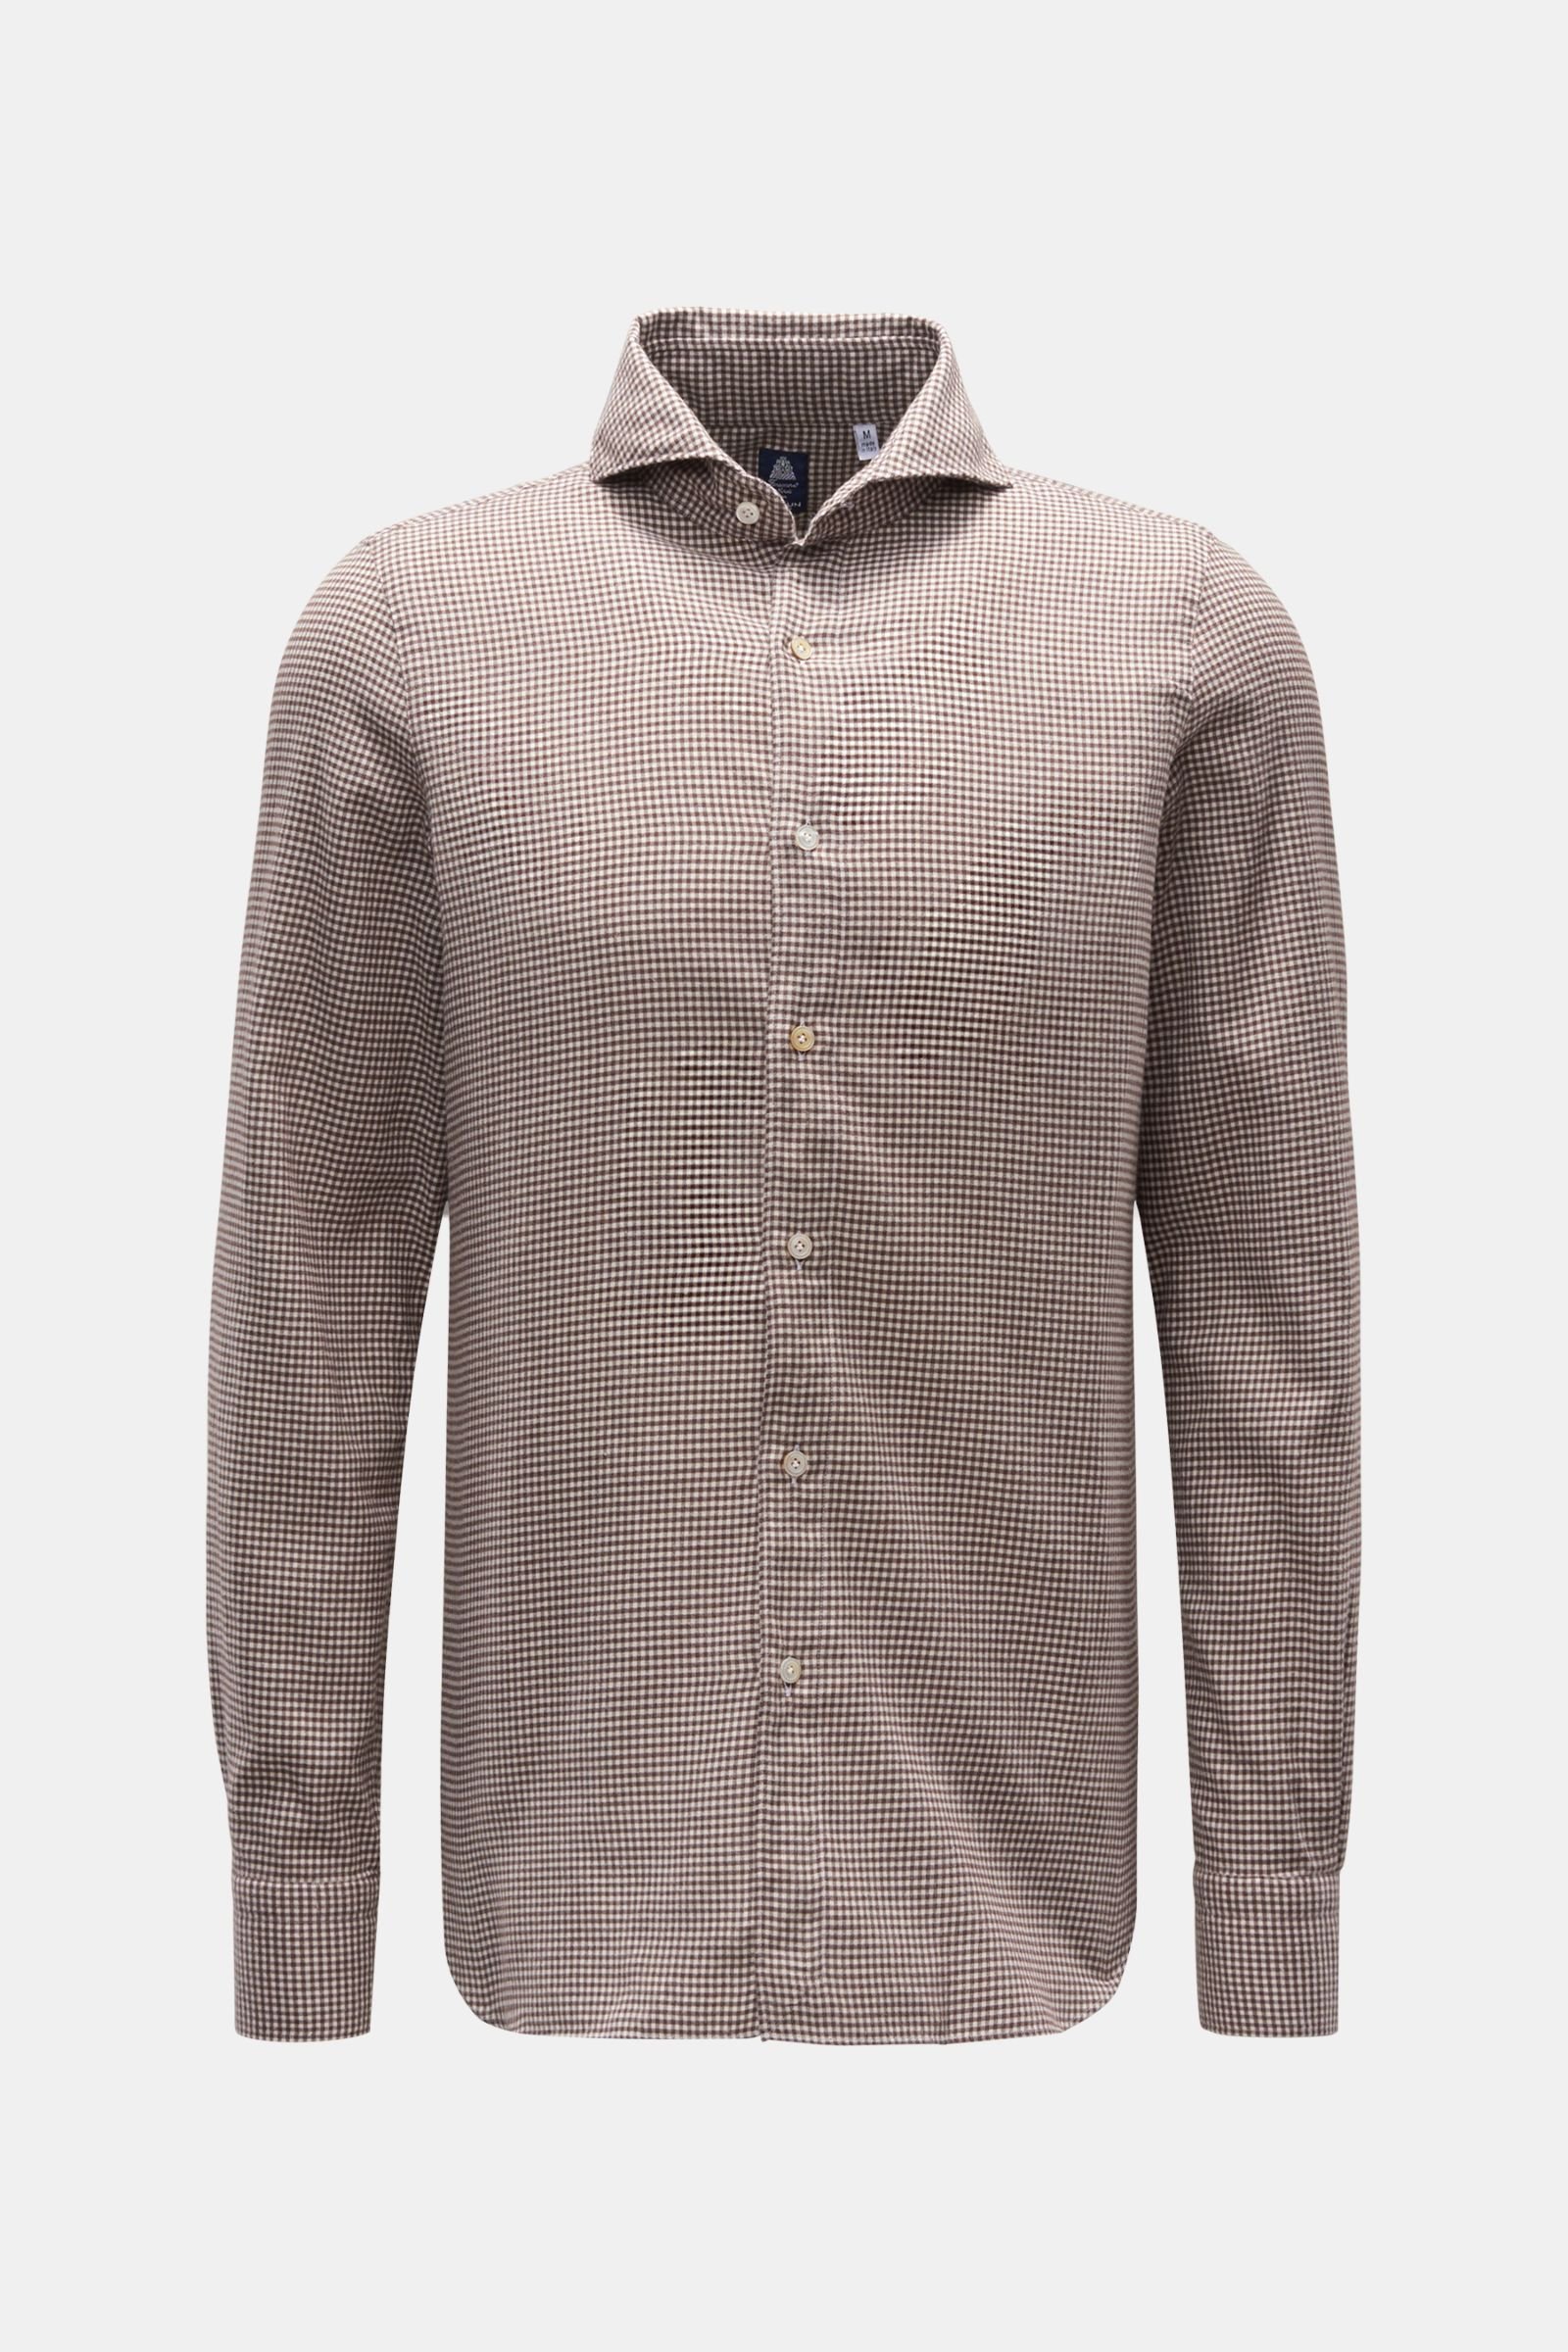 Flannel shirt 'Sergio Gaeta' shark collar dark brown/white checked